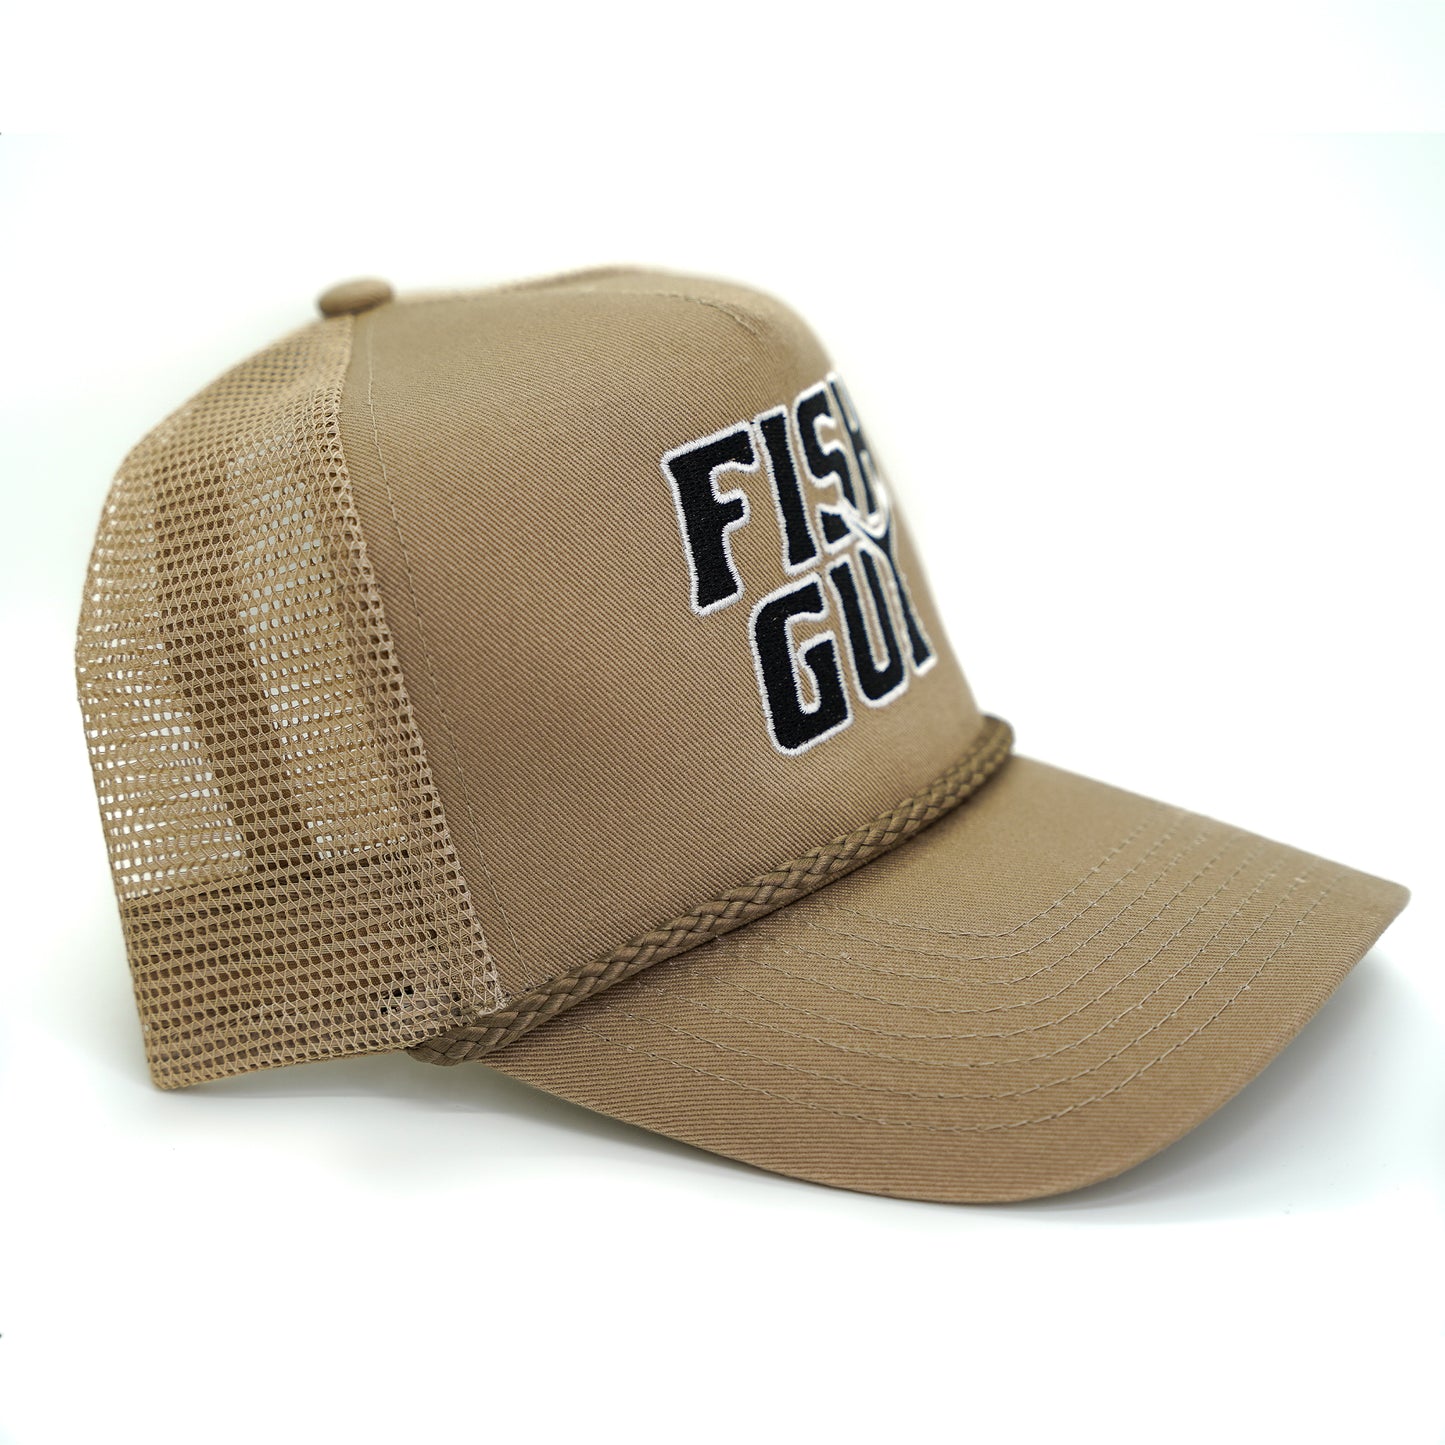 Fish Guy Tan Trucker Hat